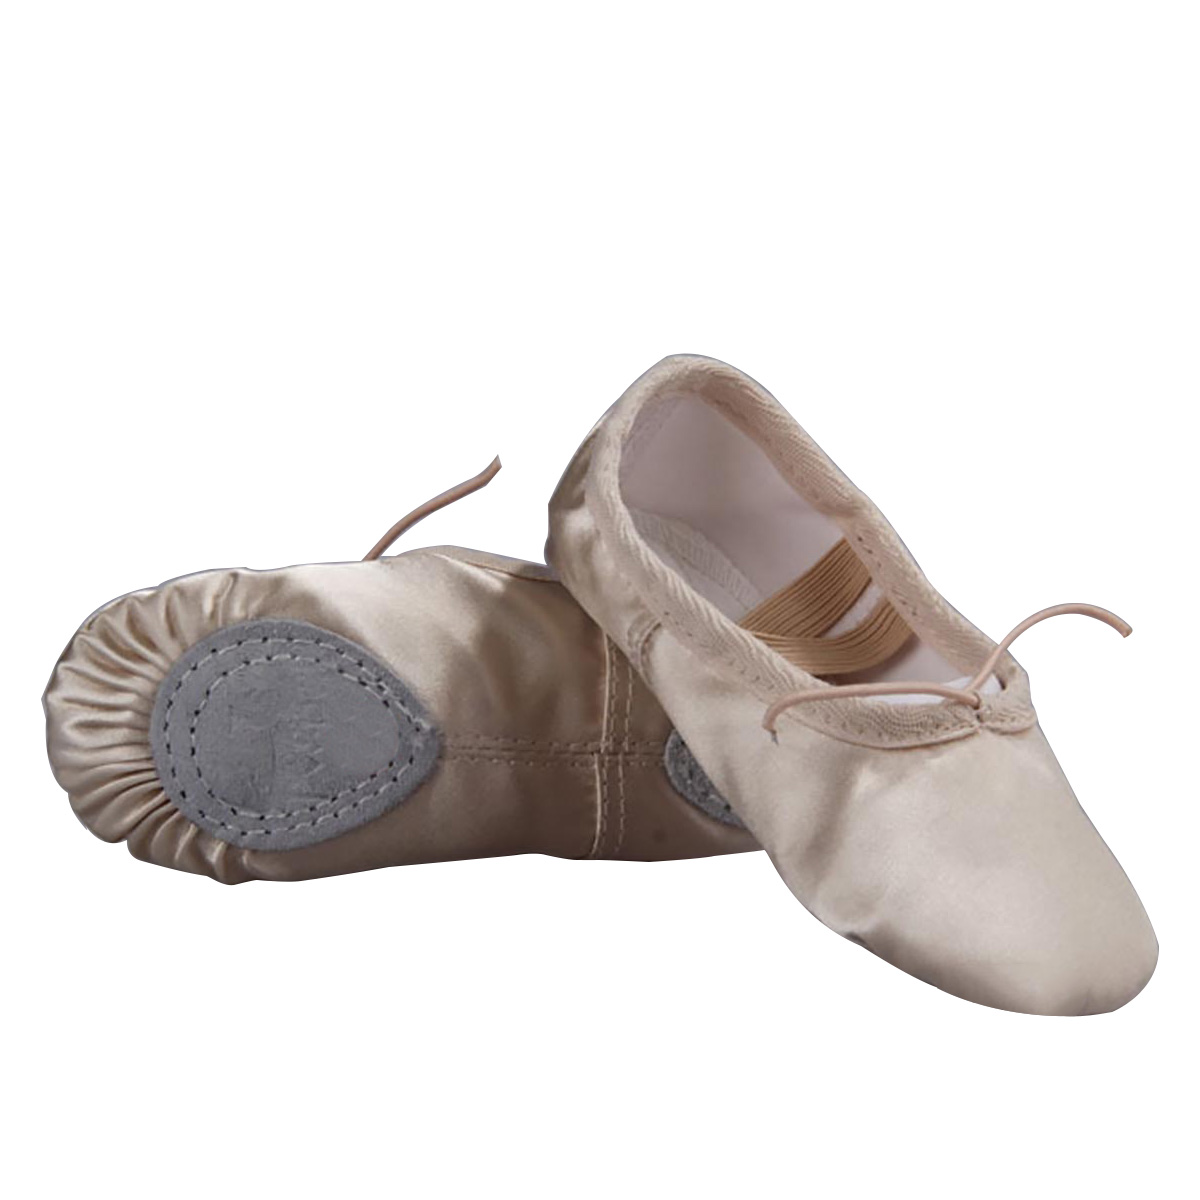 Kids Adult Ballet Shoes Stretch Fabric Split Sole Women Ballet Slippers  Pink Black Girl's Dance Shoes Comfortable Gym Yoga Shoes (Color : Black,  Shoe